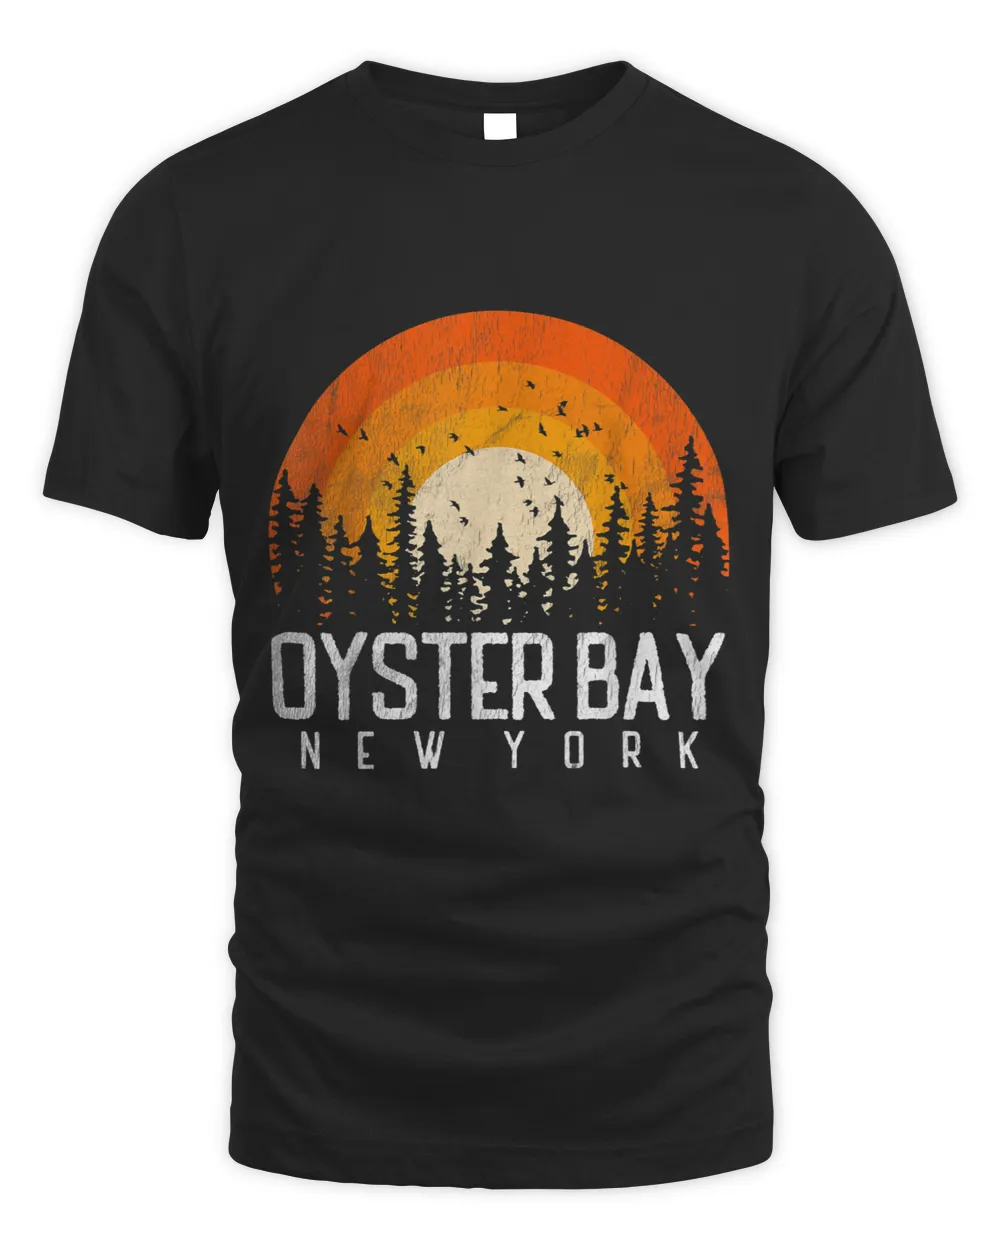 Oyster Bay New York NY Shirt Retro Vintage 70s 80s 90s Gift